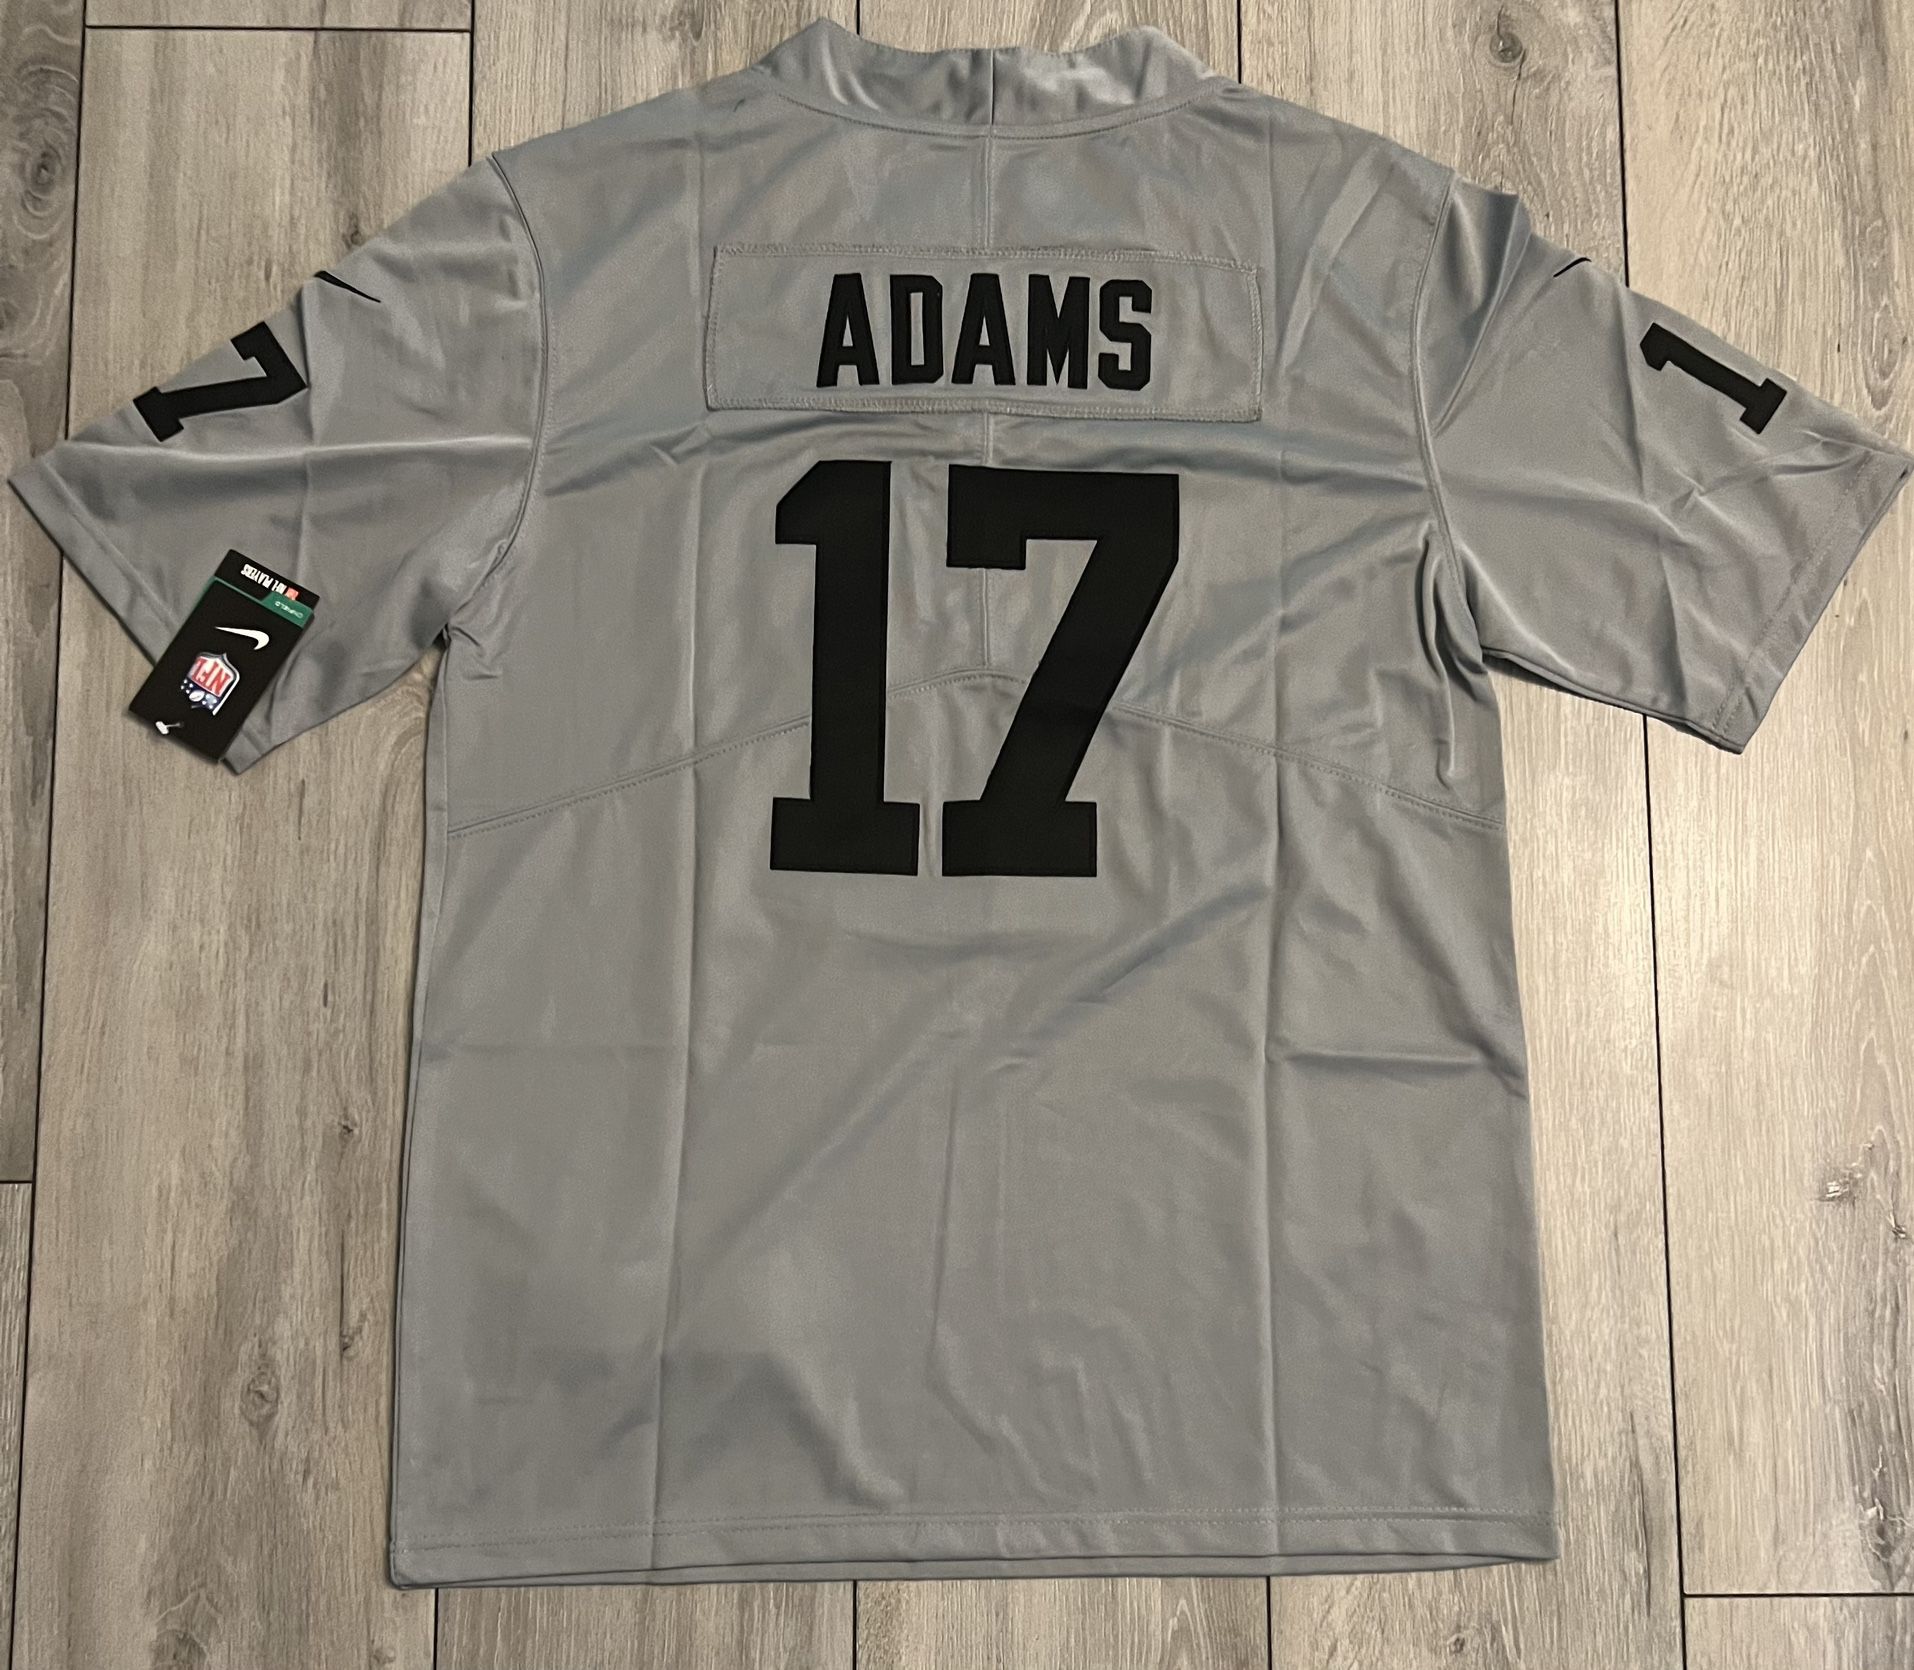 Davante Adams Jersey Las Vegas Raiders - Brand New for Sale in